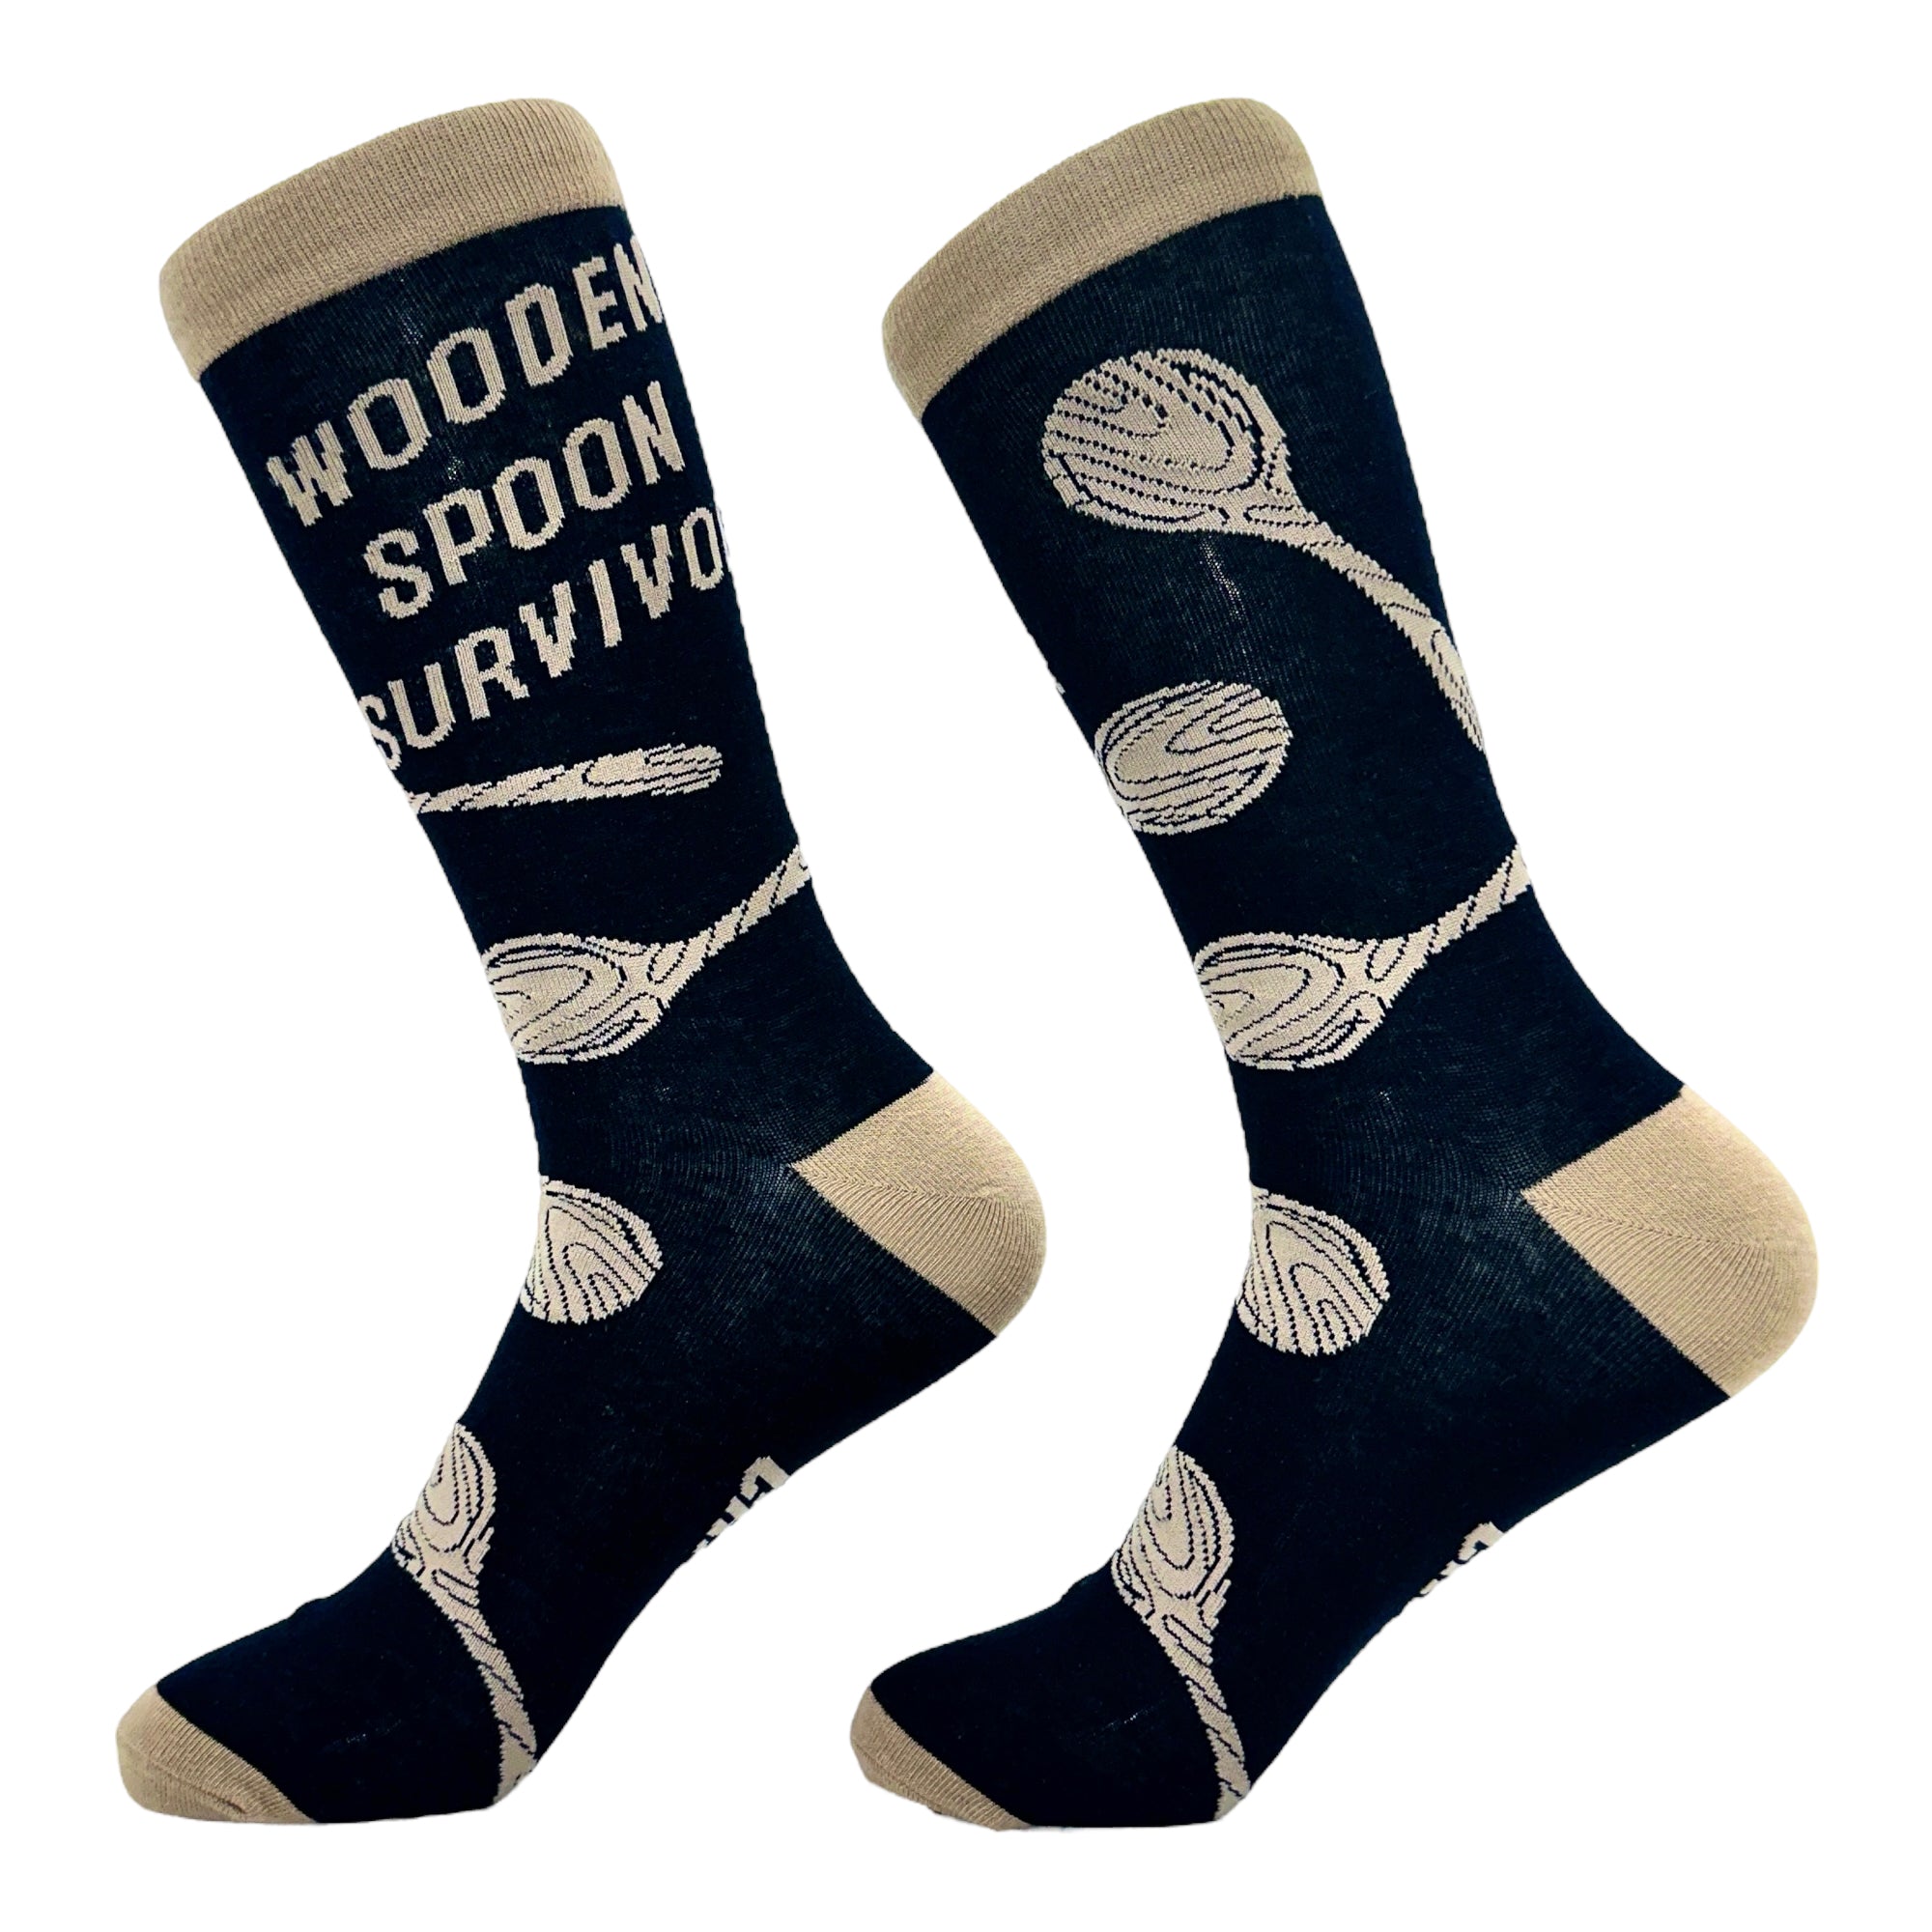 Funny Black - Wooden Spoon Men's Wooden Spoon Survivor Sock Nerdy Sarcastic Tee